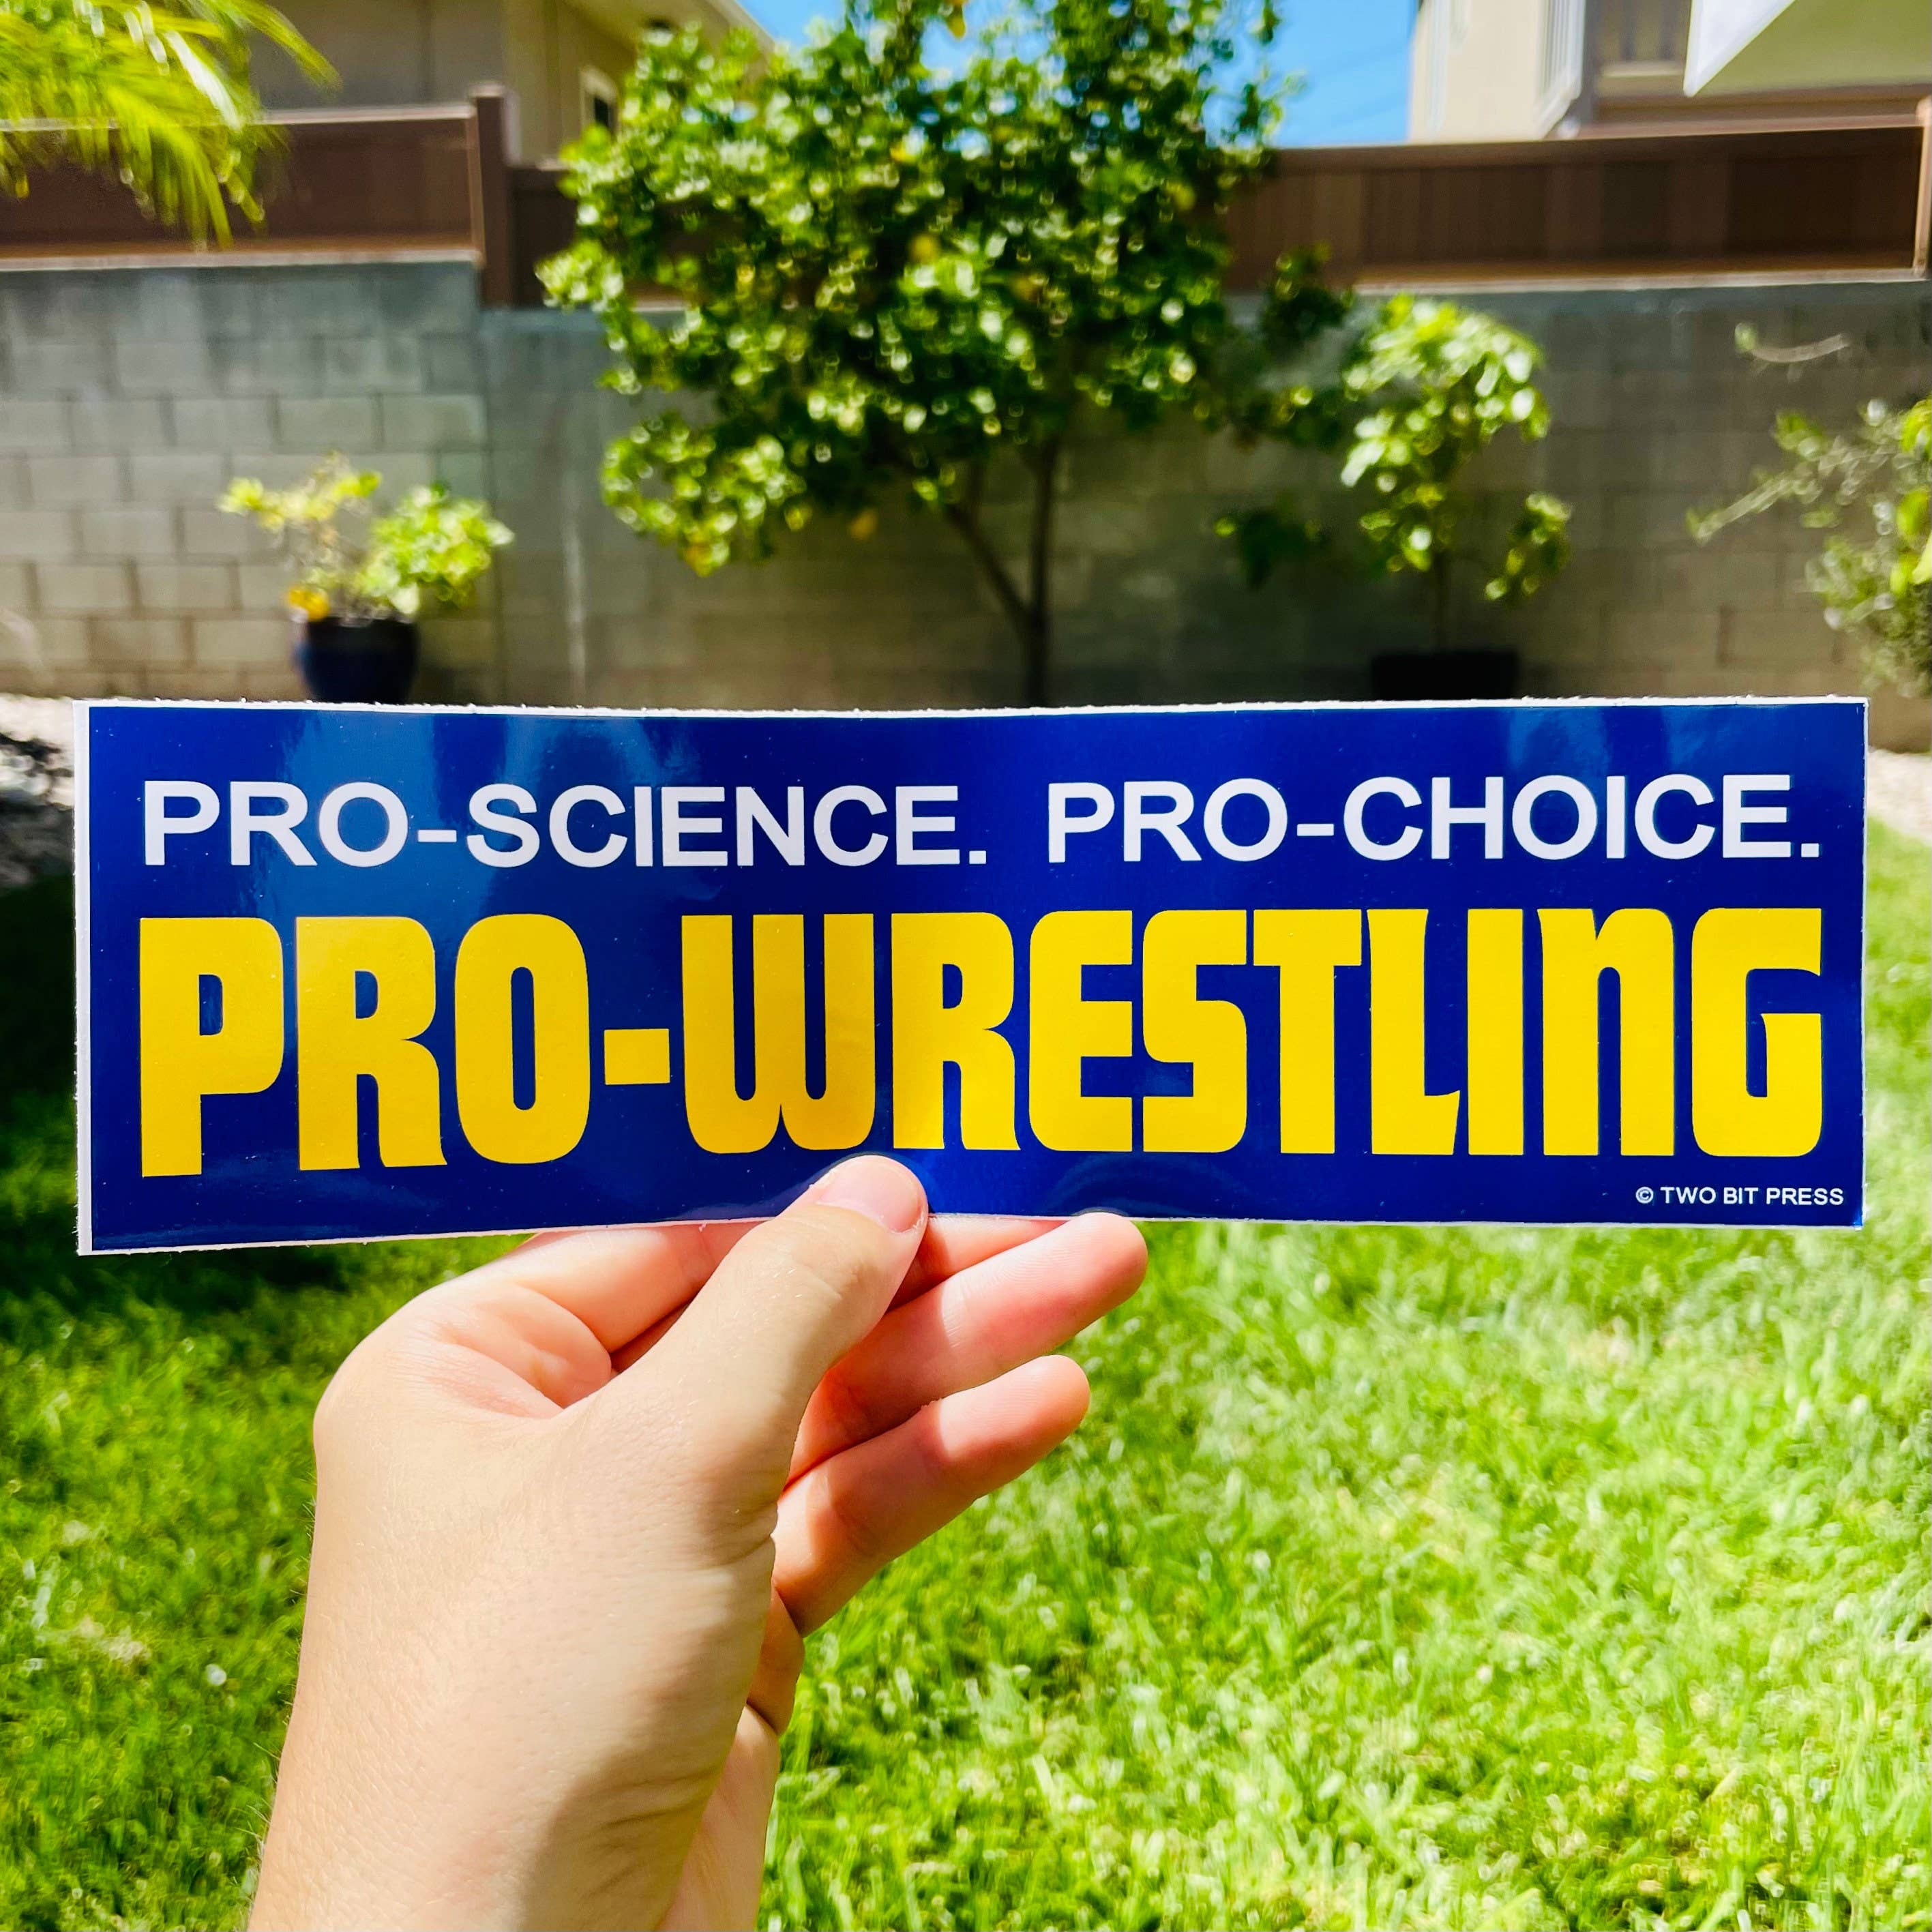 Pro-Choice Pro-Wrestling Bumper Sticker - Funny 90s Style